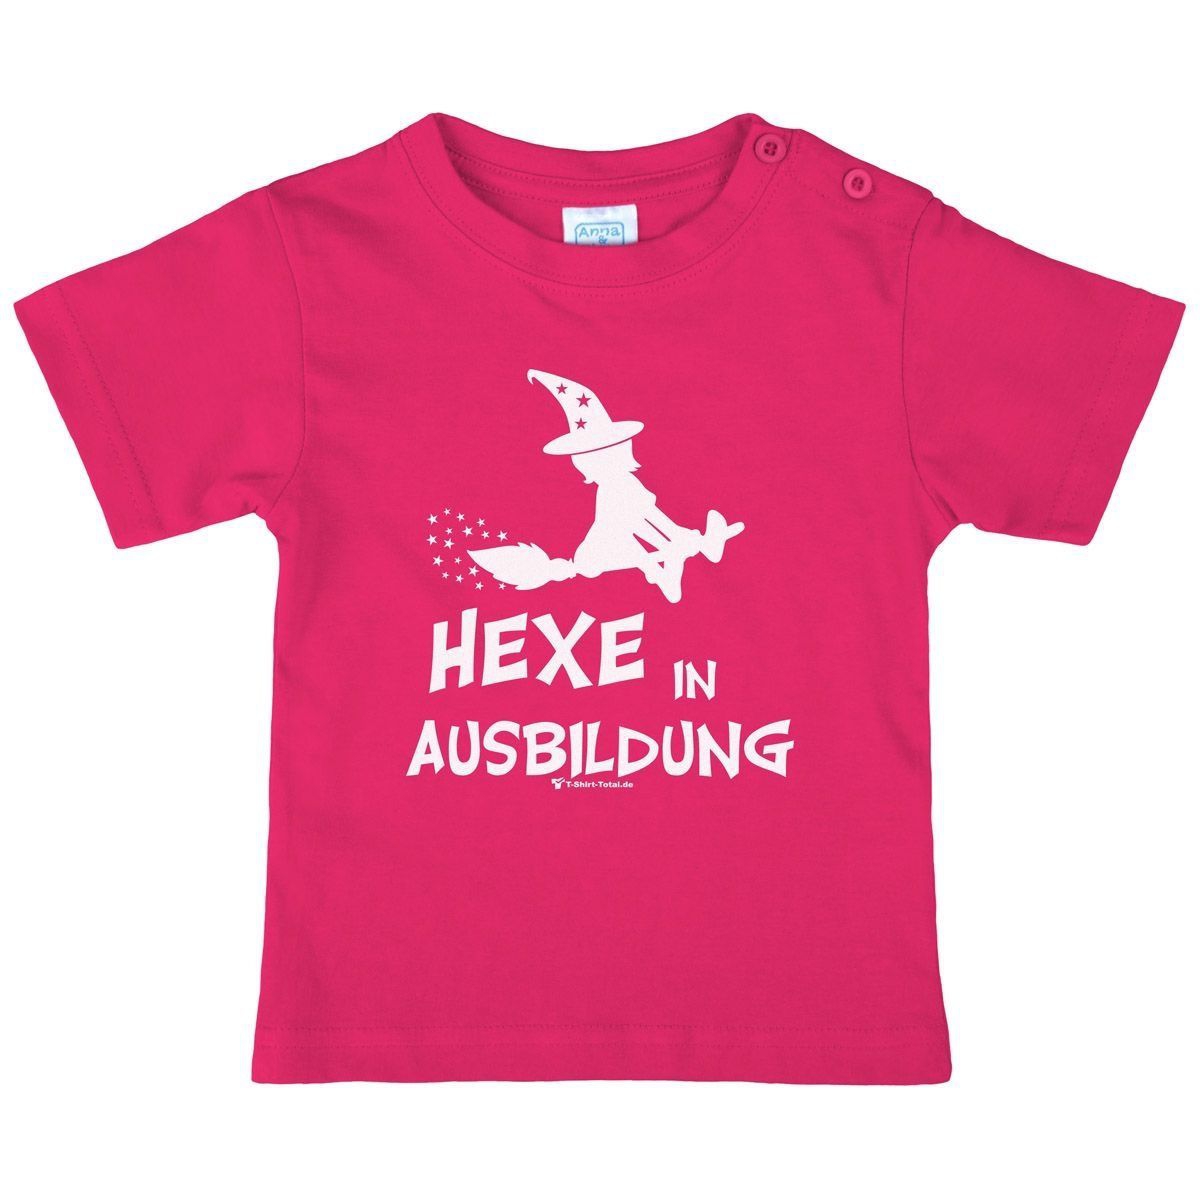 Hexe in Ausbildung Kinder T-Shirt pink 80 / 86